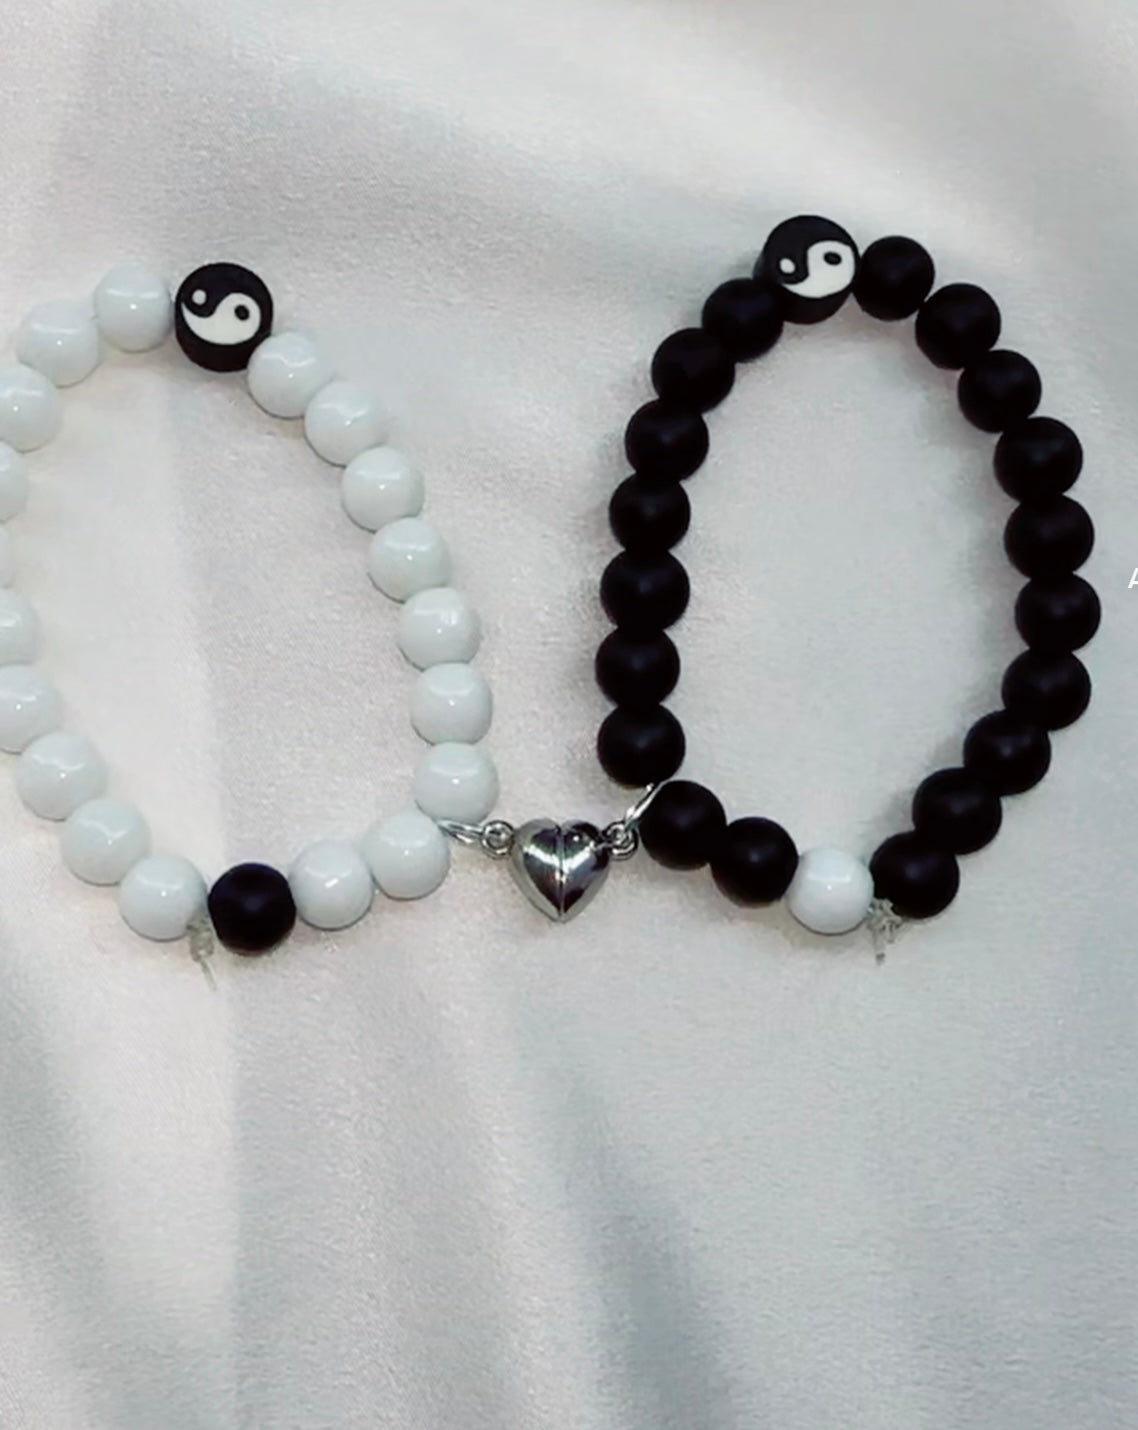 Yin & Yang matching bracelets